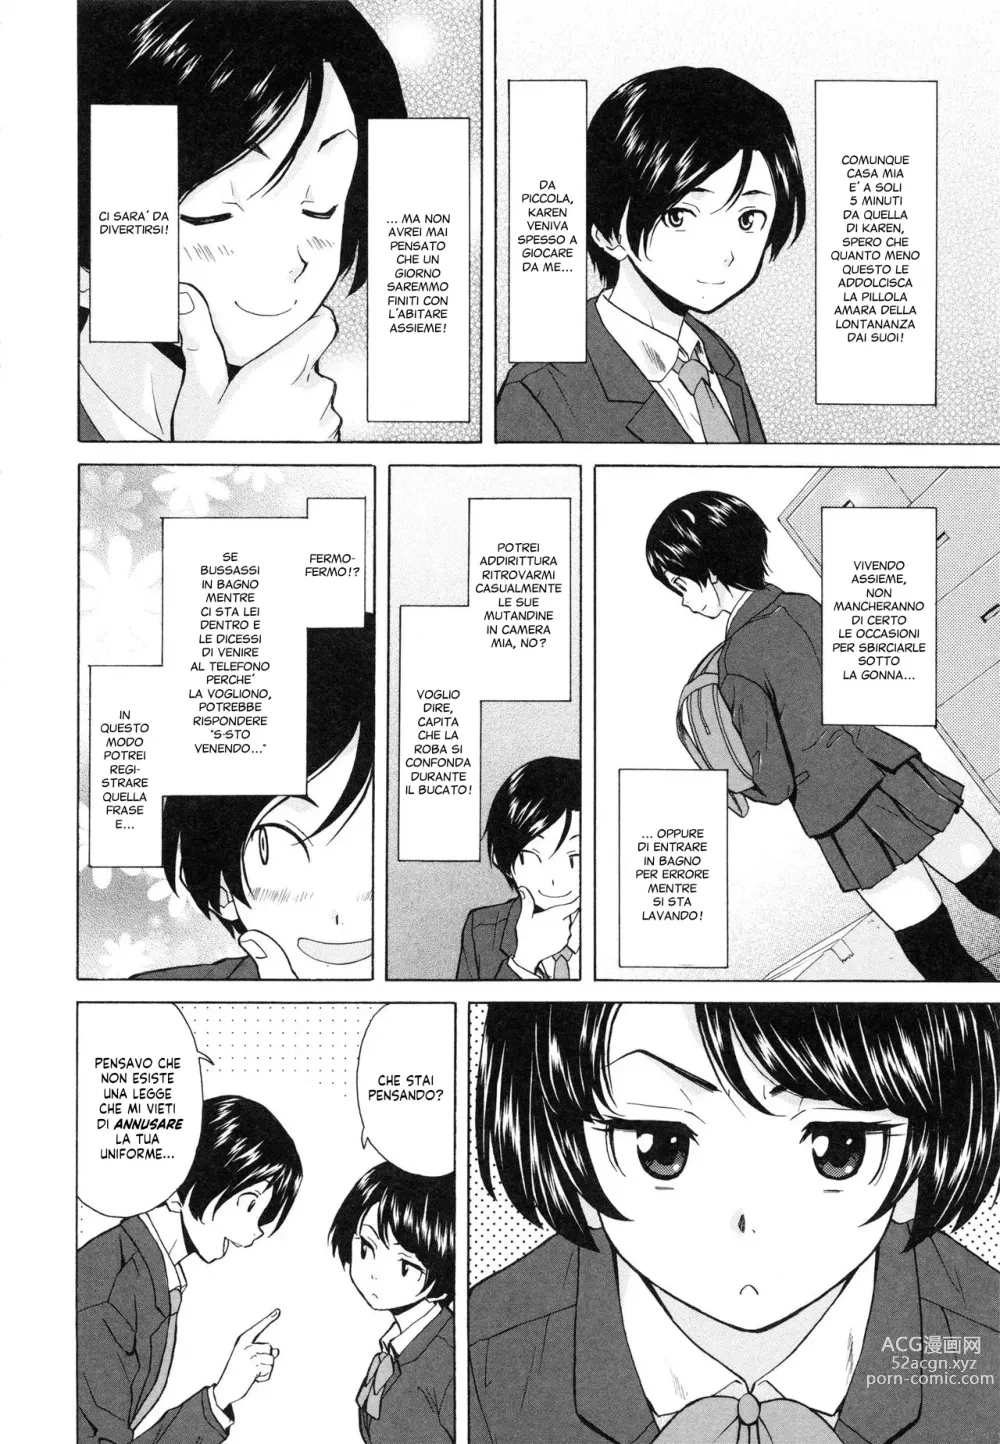 Page 8 of manga Cugine e Cognate...